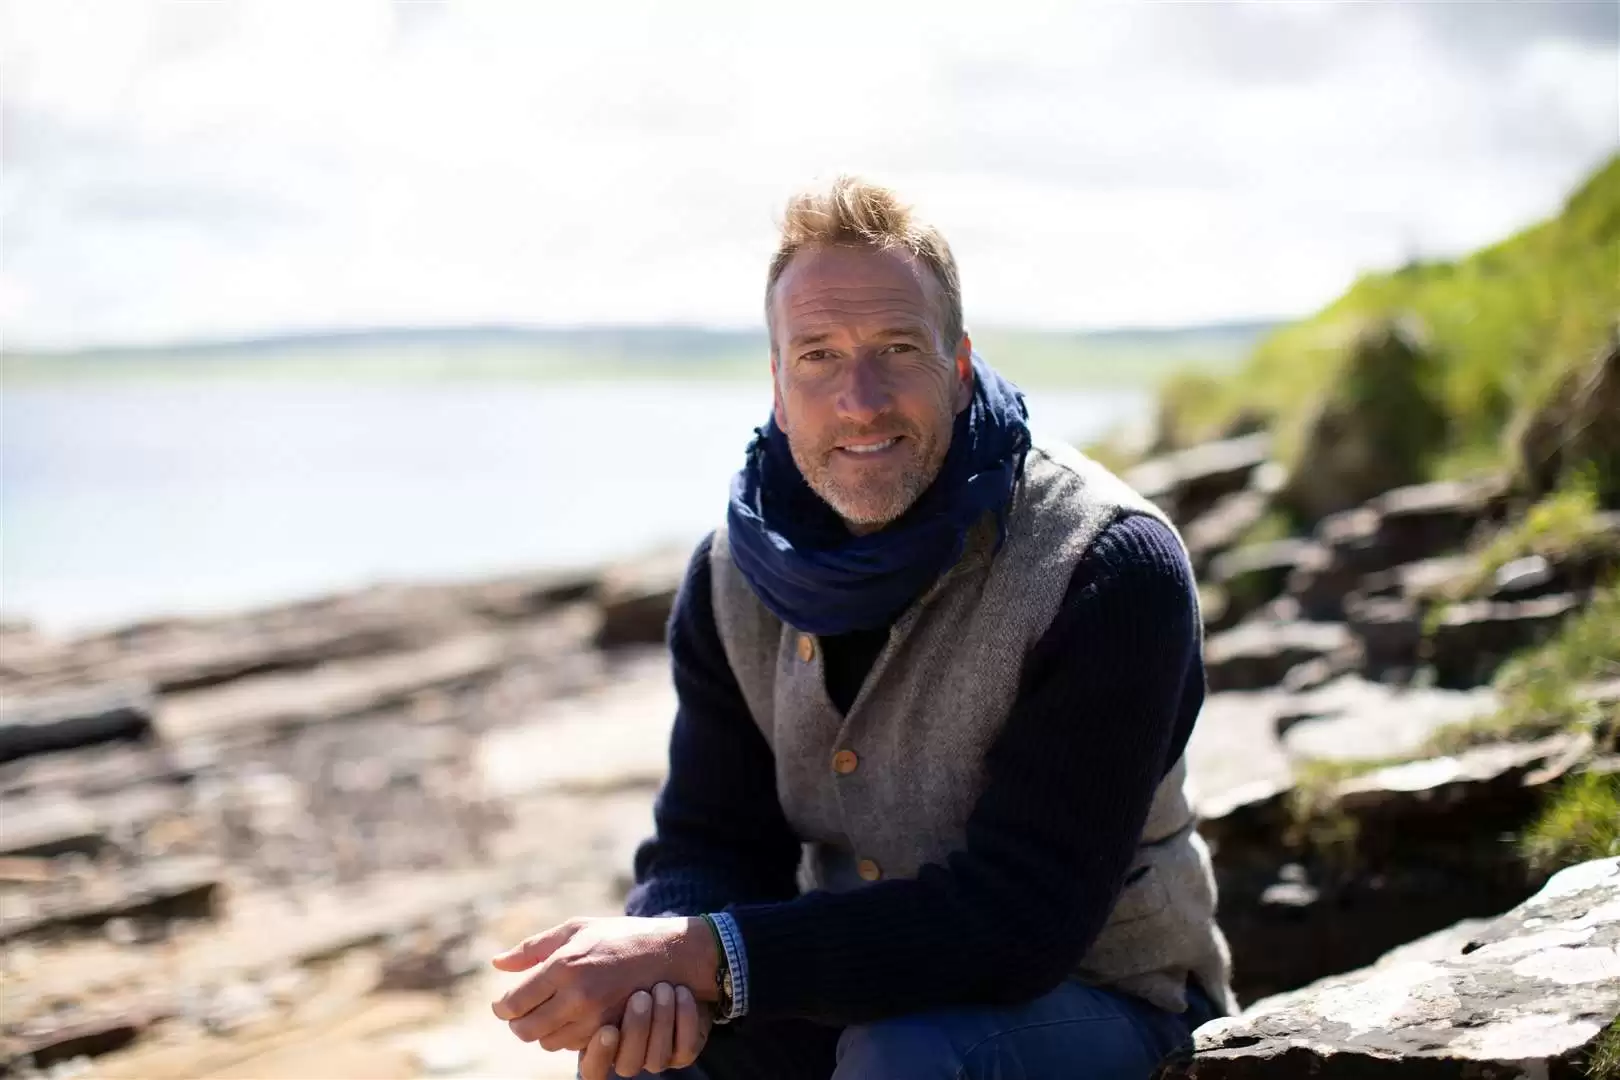 Ben Fogle, broadcaster, writer & adventurer, smiling at the camera sat on a beach.